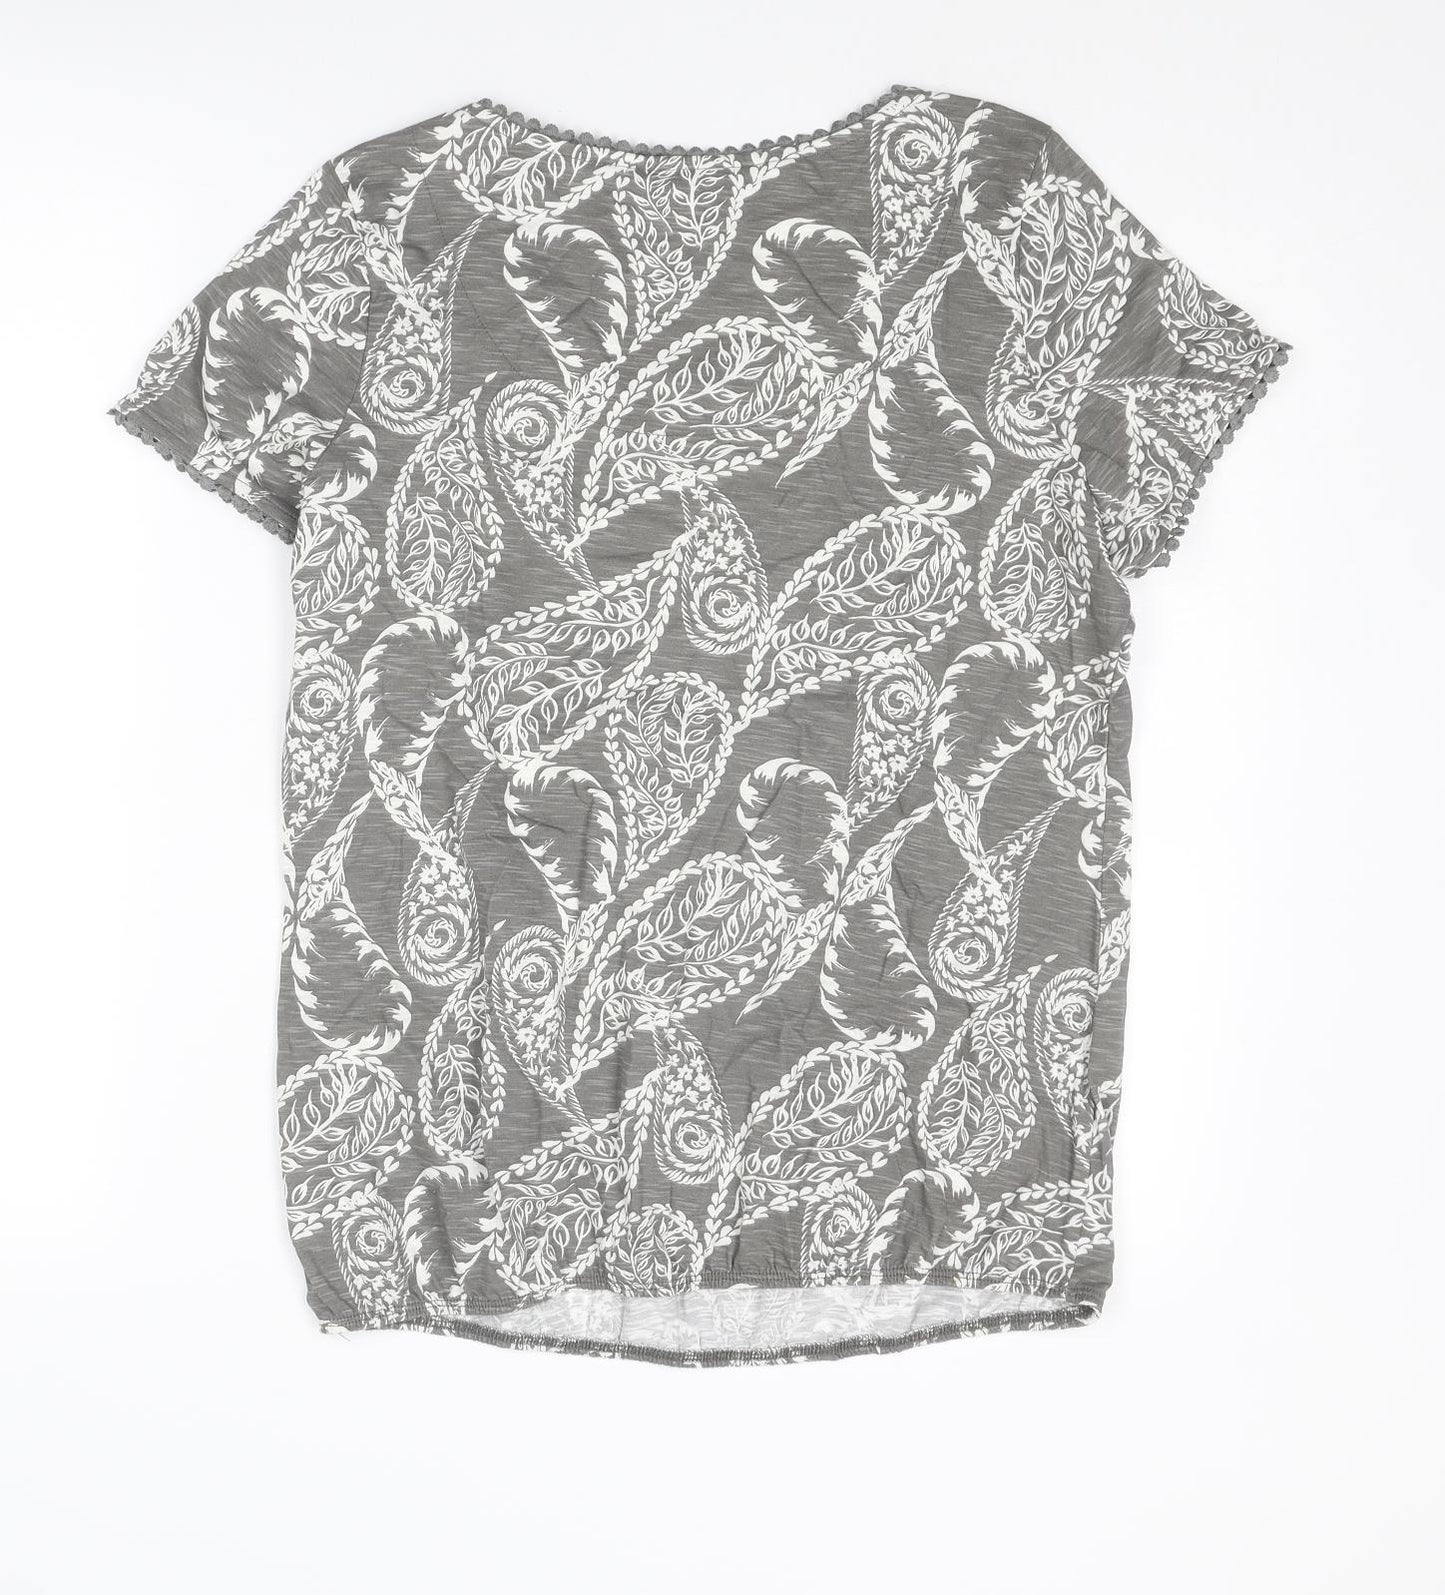 NEXT Womens Grey Geometric Cotton Basic T-Shirt Size 14 Round Neck